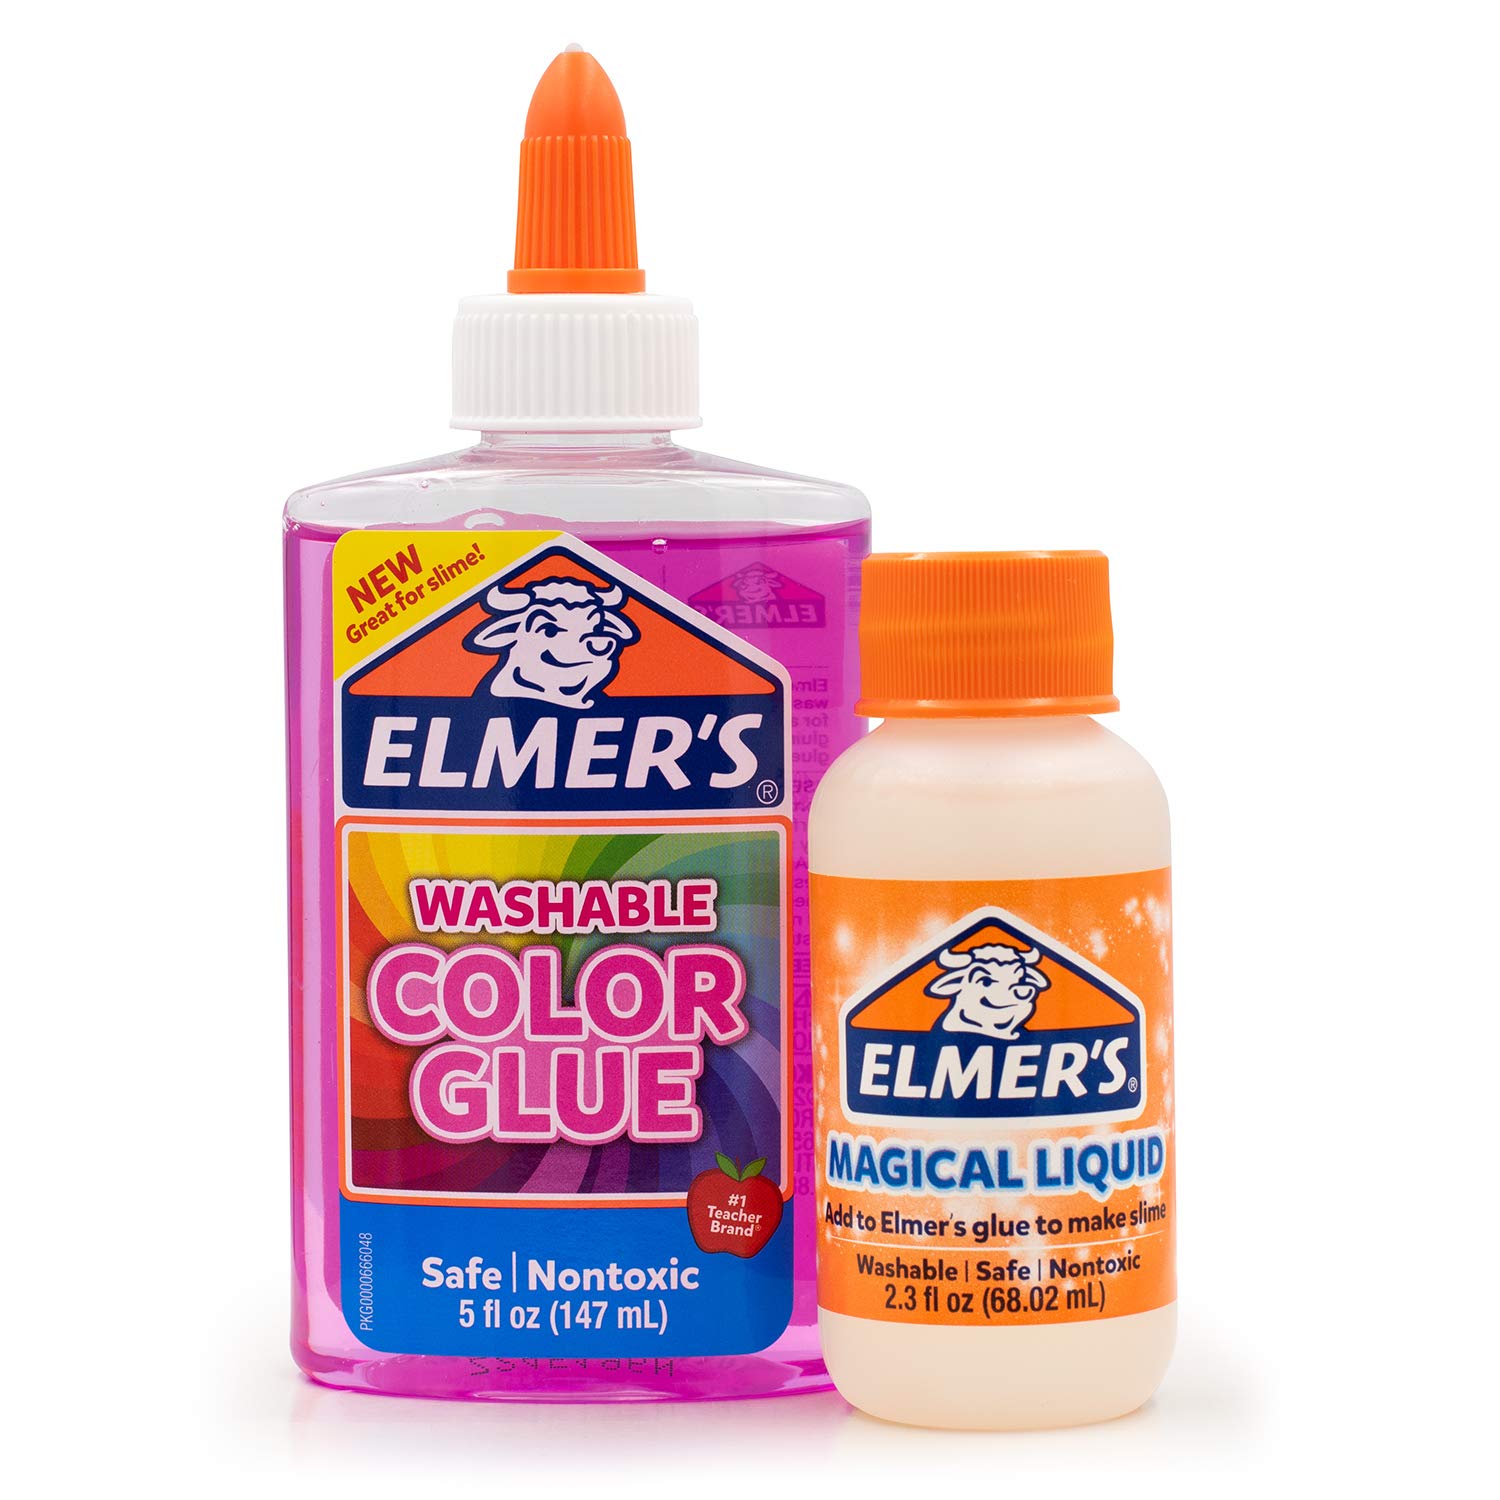 Elmer`S Translucent Pink Slime Kit